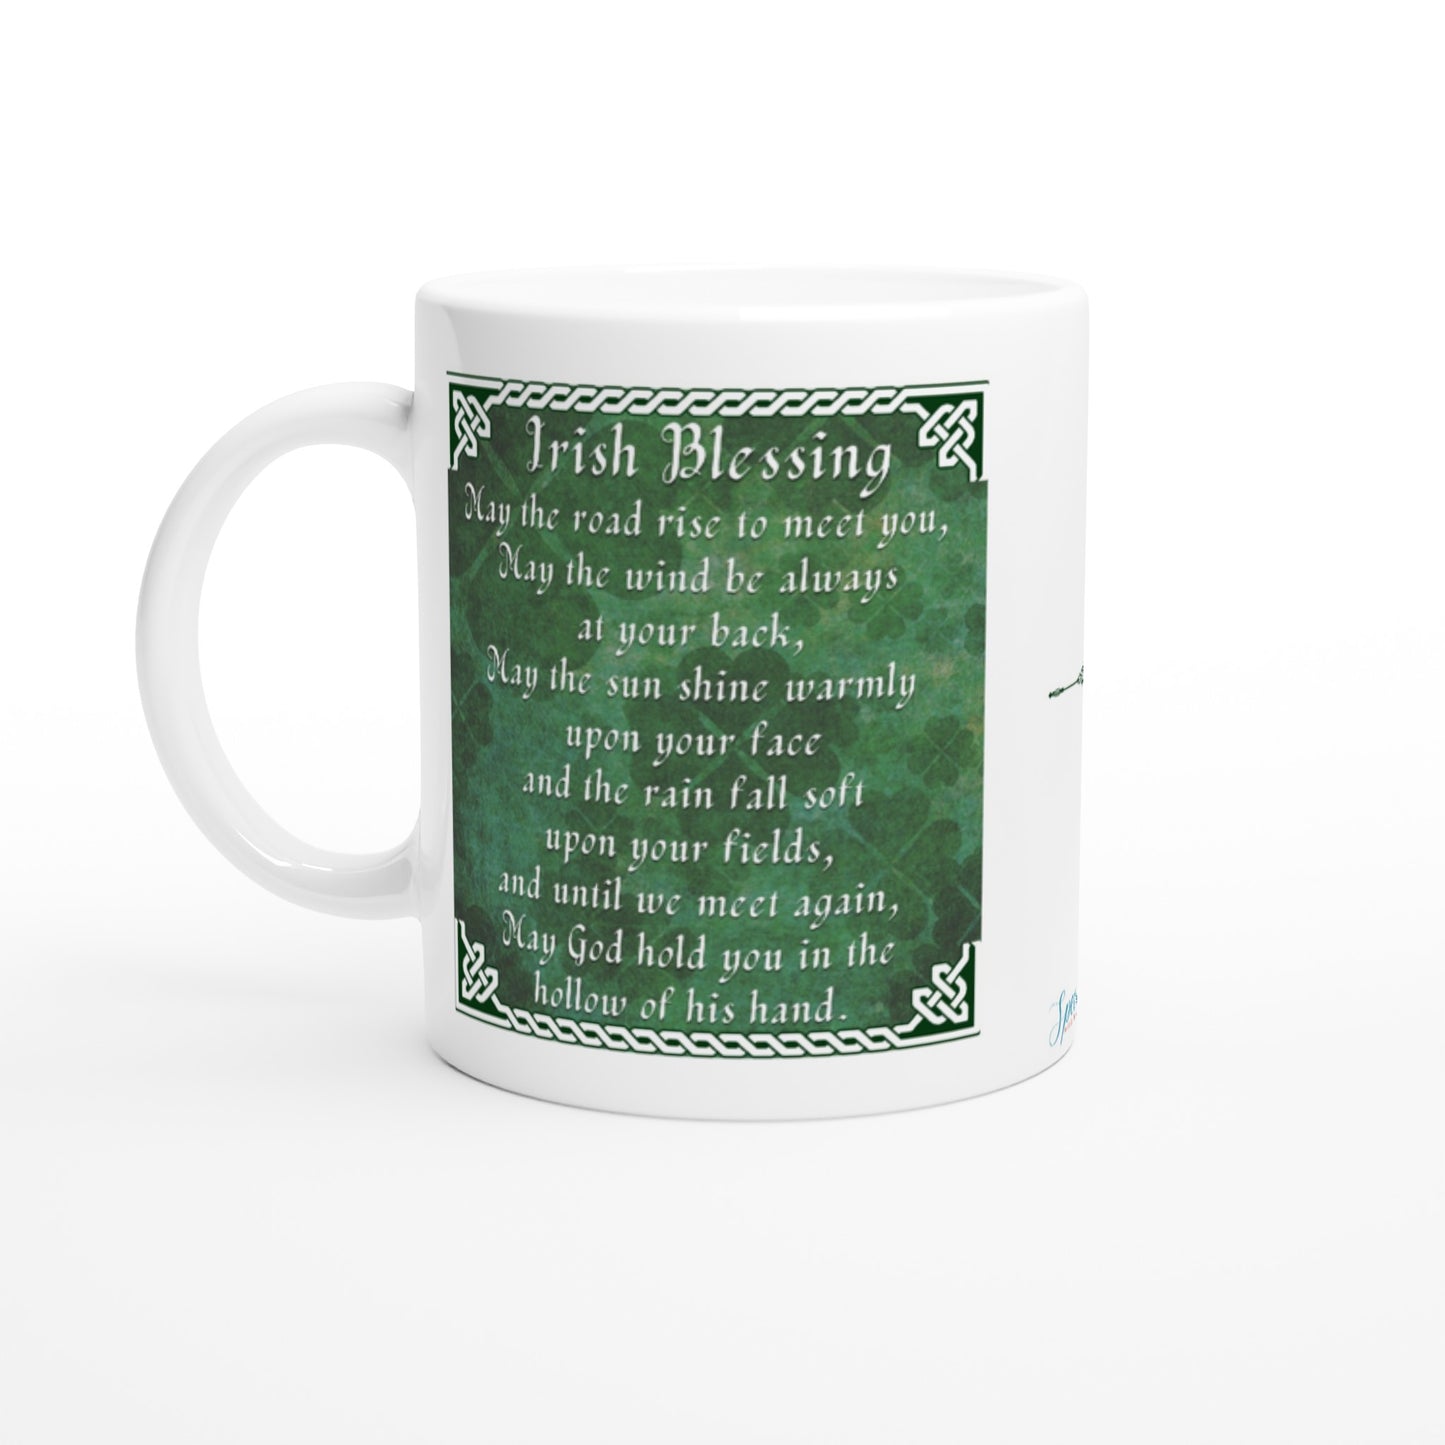 "Irish Blessing" Customizable Photo 11 oz. Mug front view